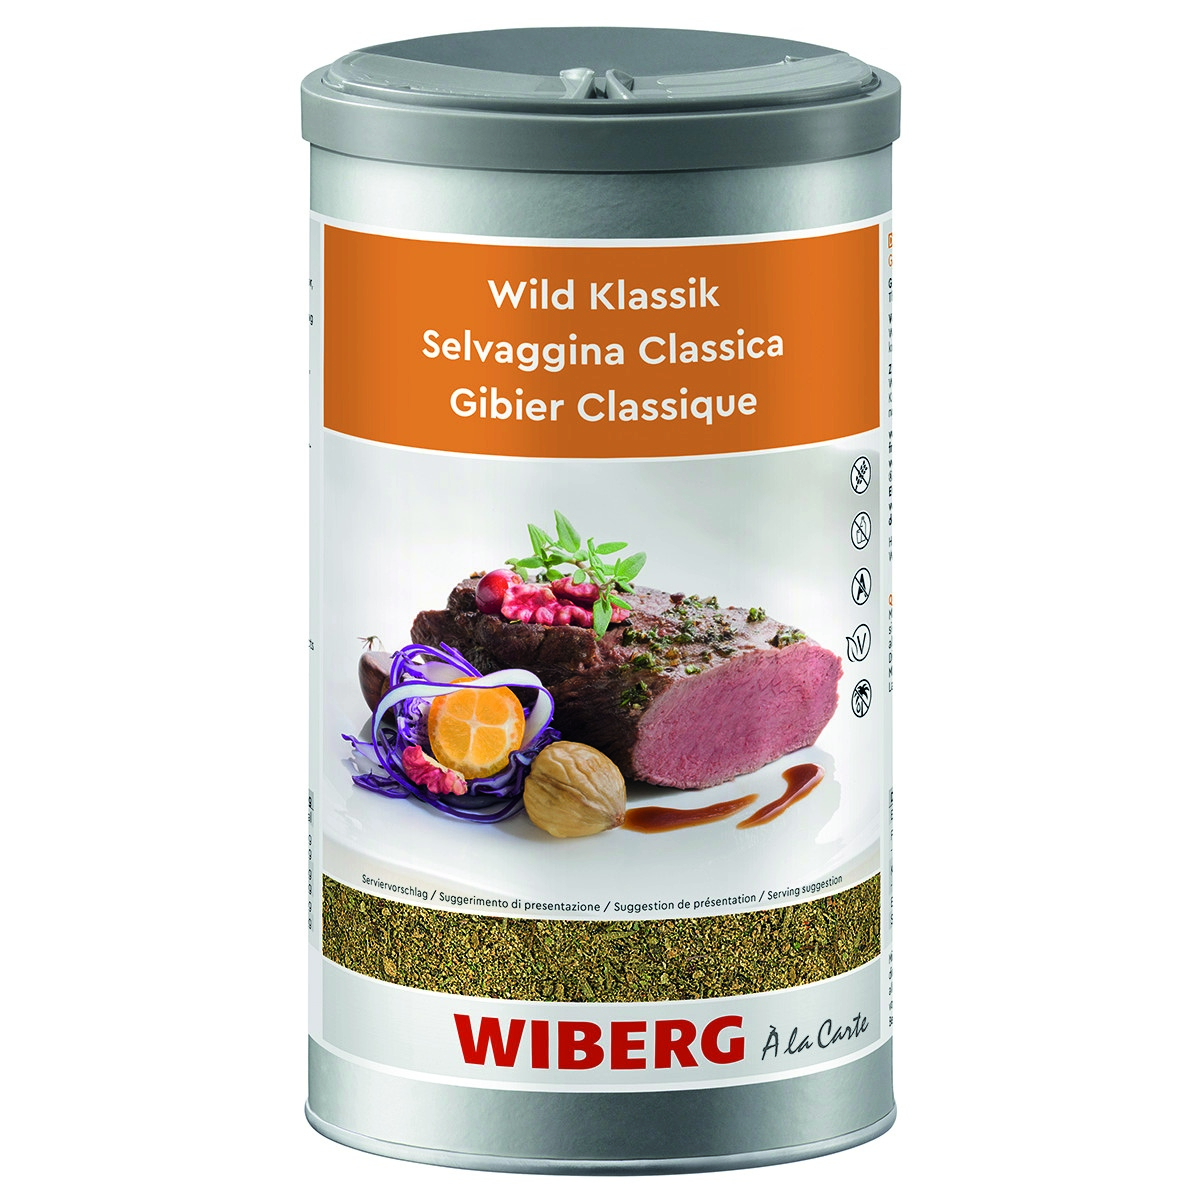 WIBERG Wild Klassik